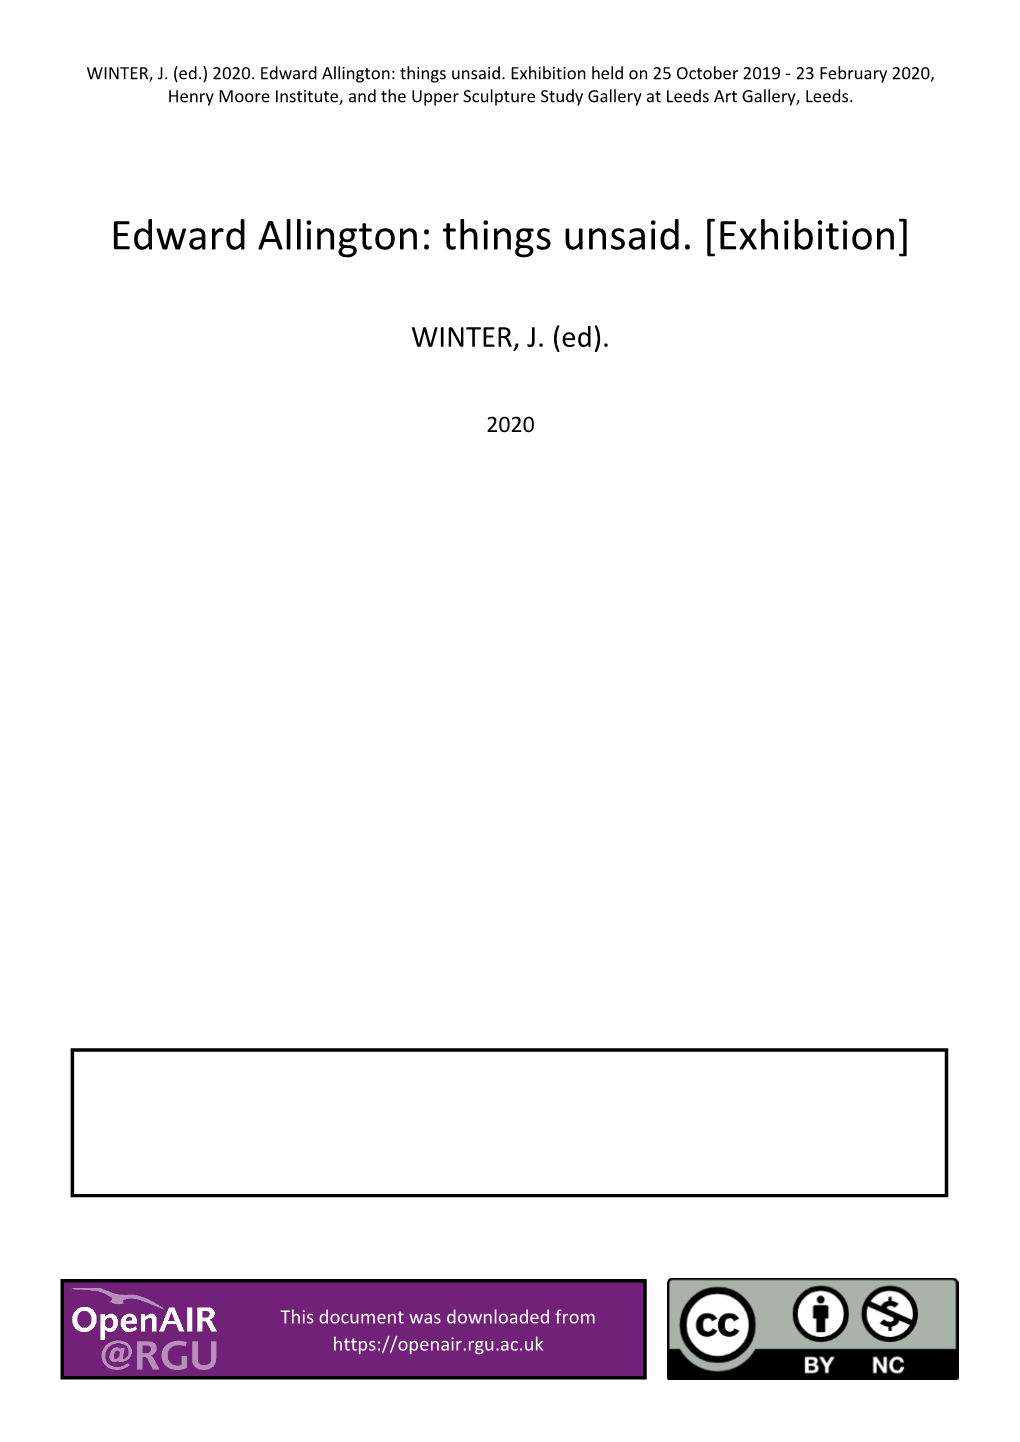 Edward Allington: Things Unsaid